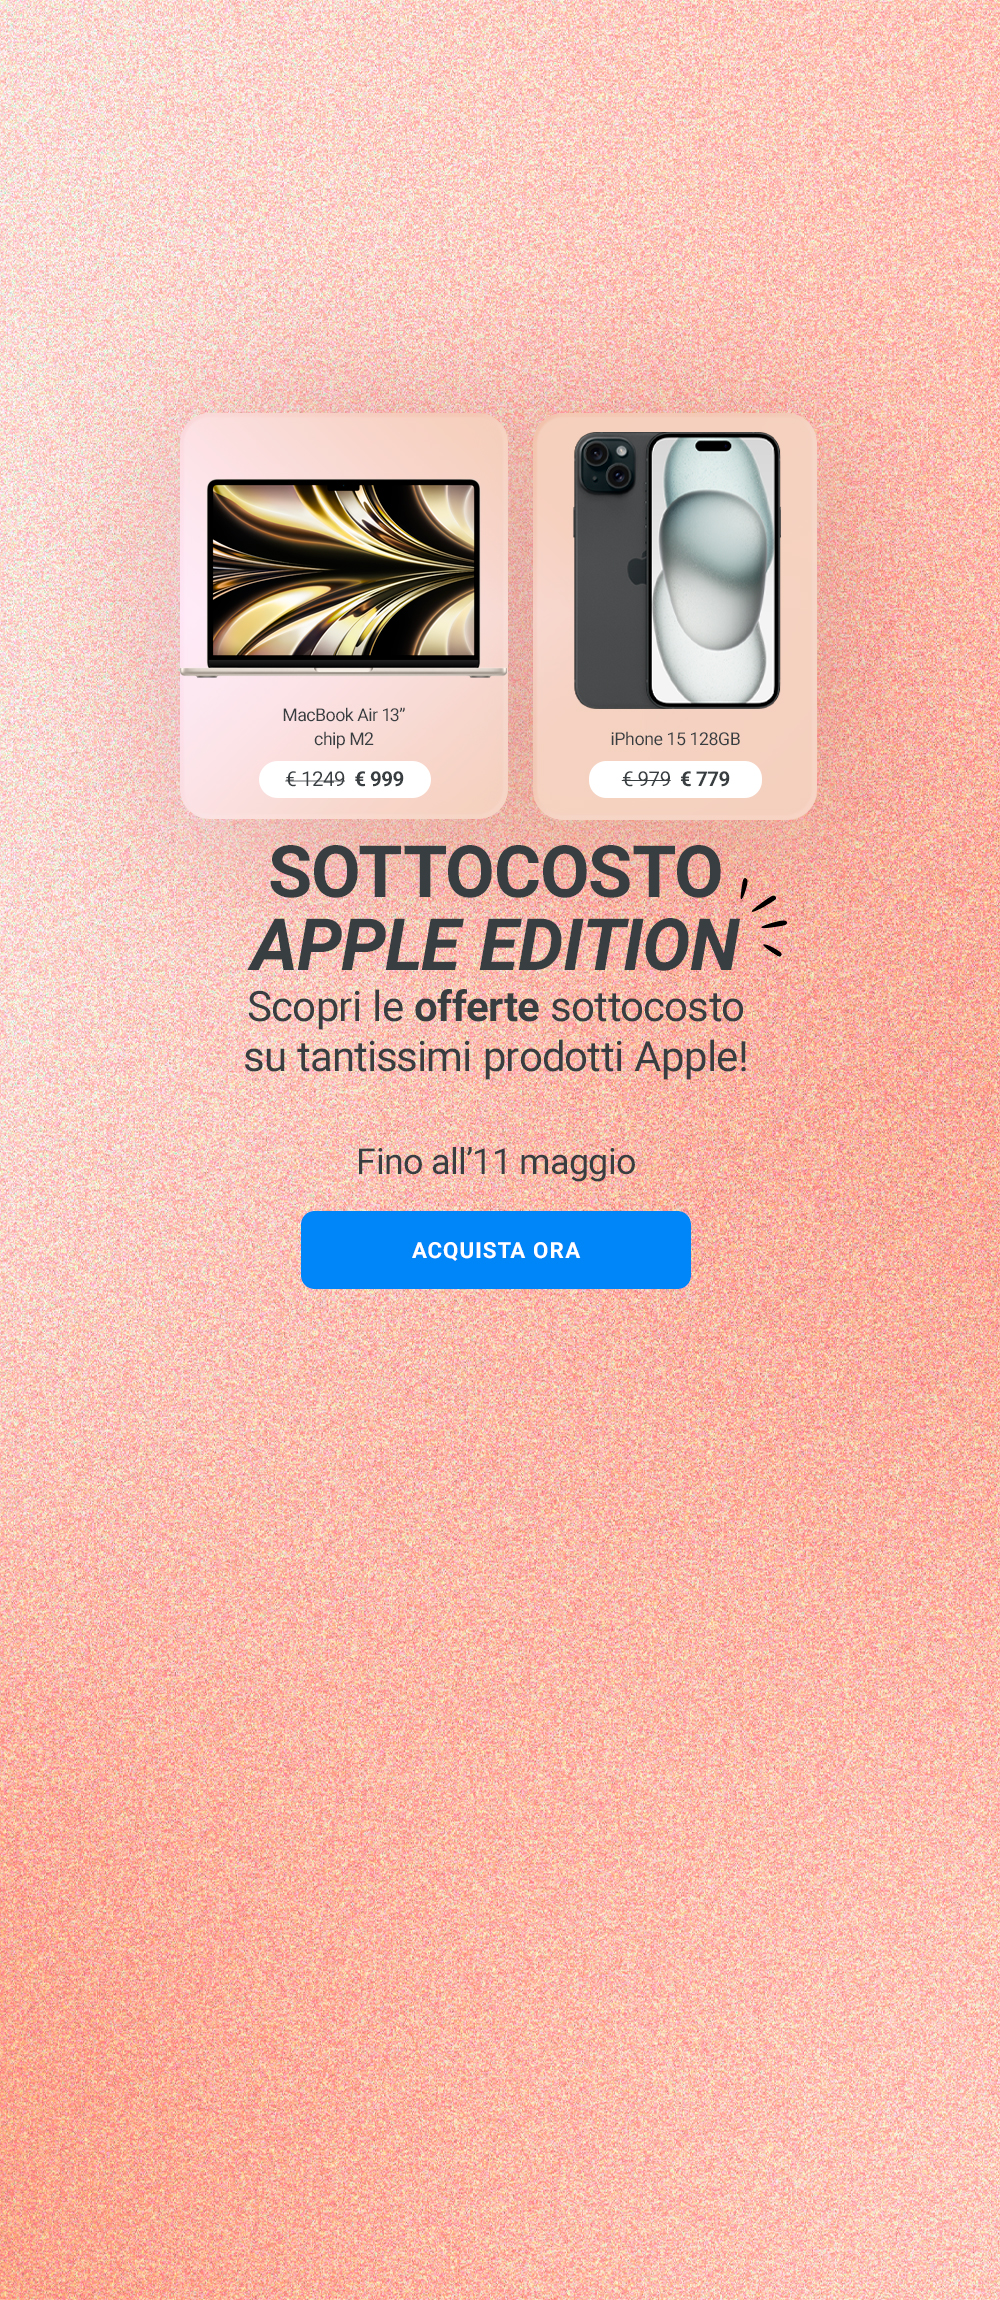 Sottocosto-maggio-banner-Apple-rework desktopp.jpg